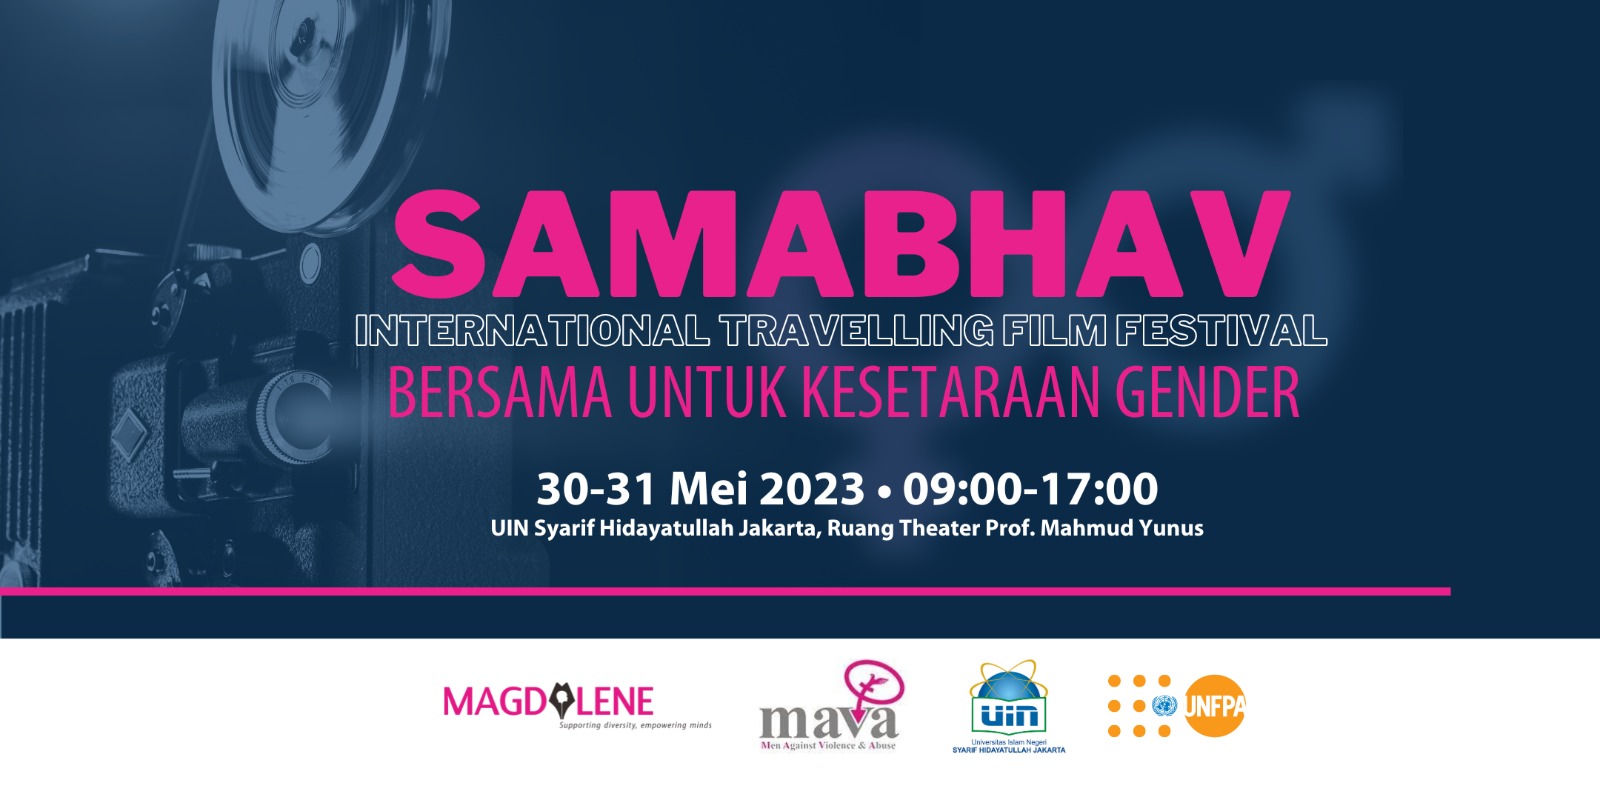 SamaBhav Travelling Film Festival, Bersama Dorong Kesetaraan Gender